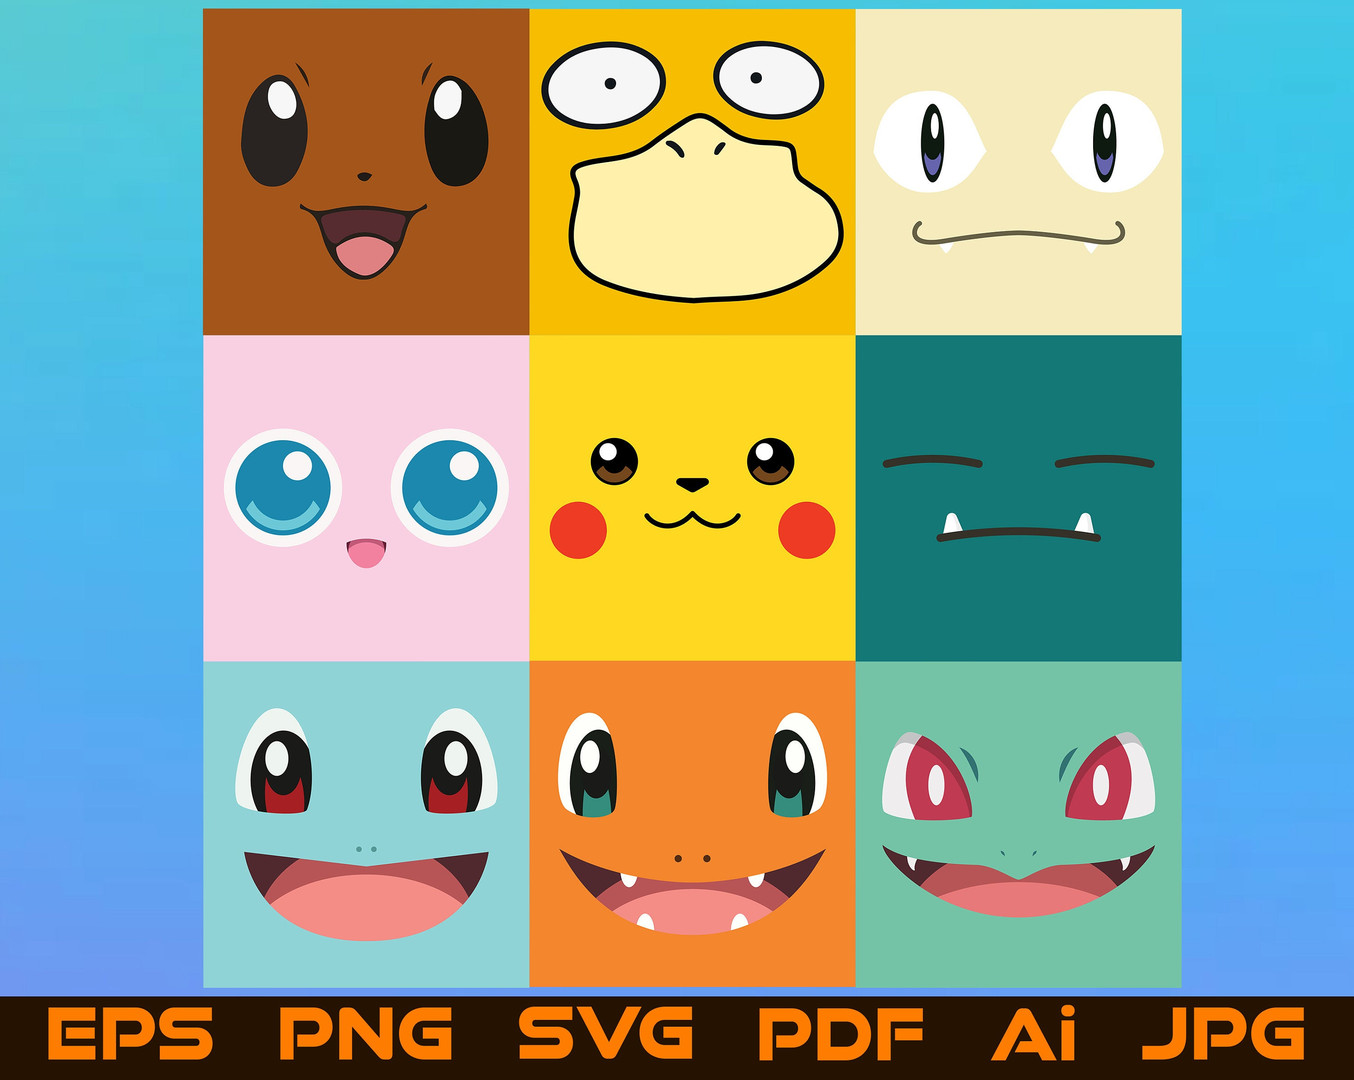 Pikachu SVG/PNG File Cut File Pokemonpikachu Profile Vinyl 